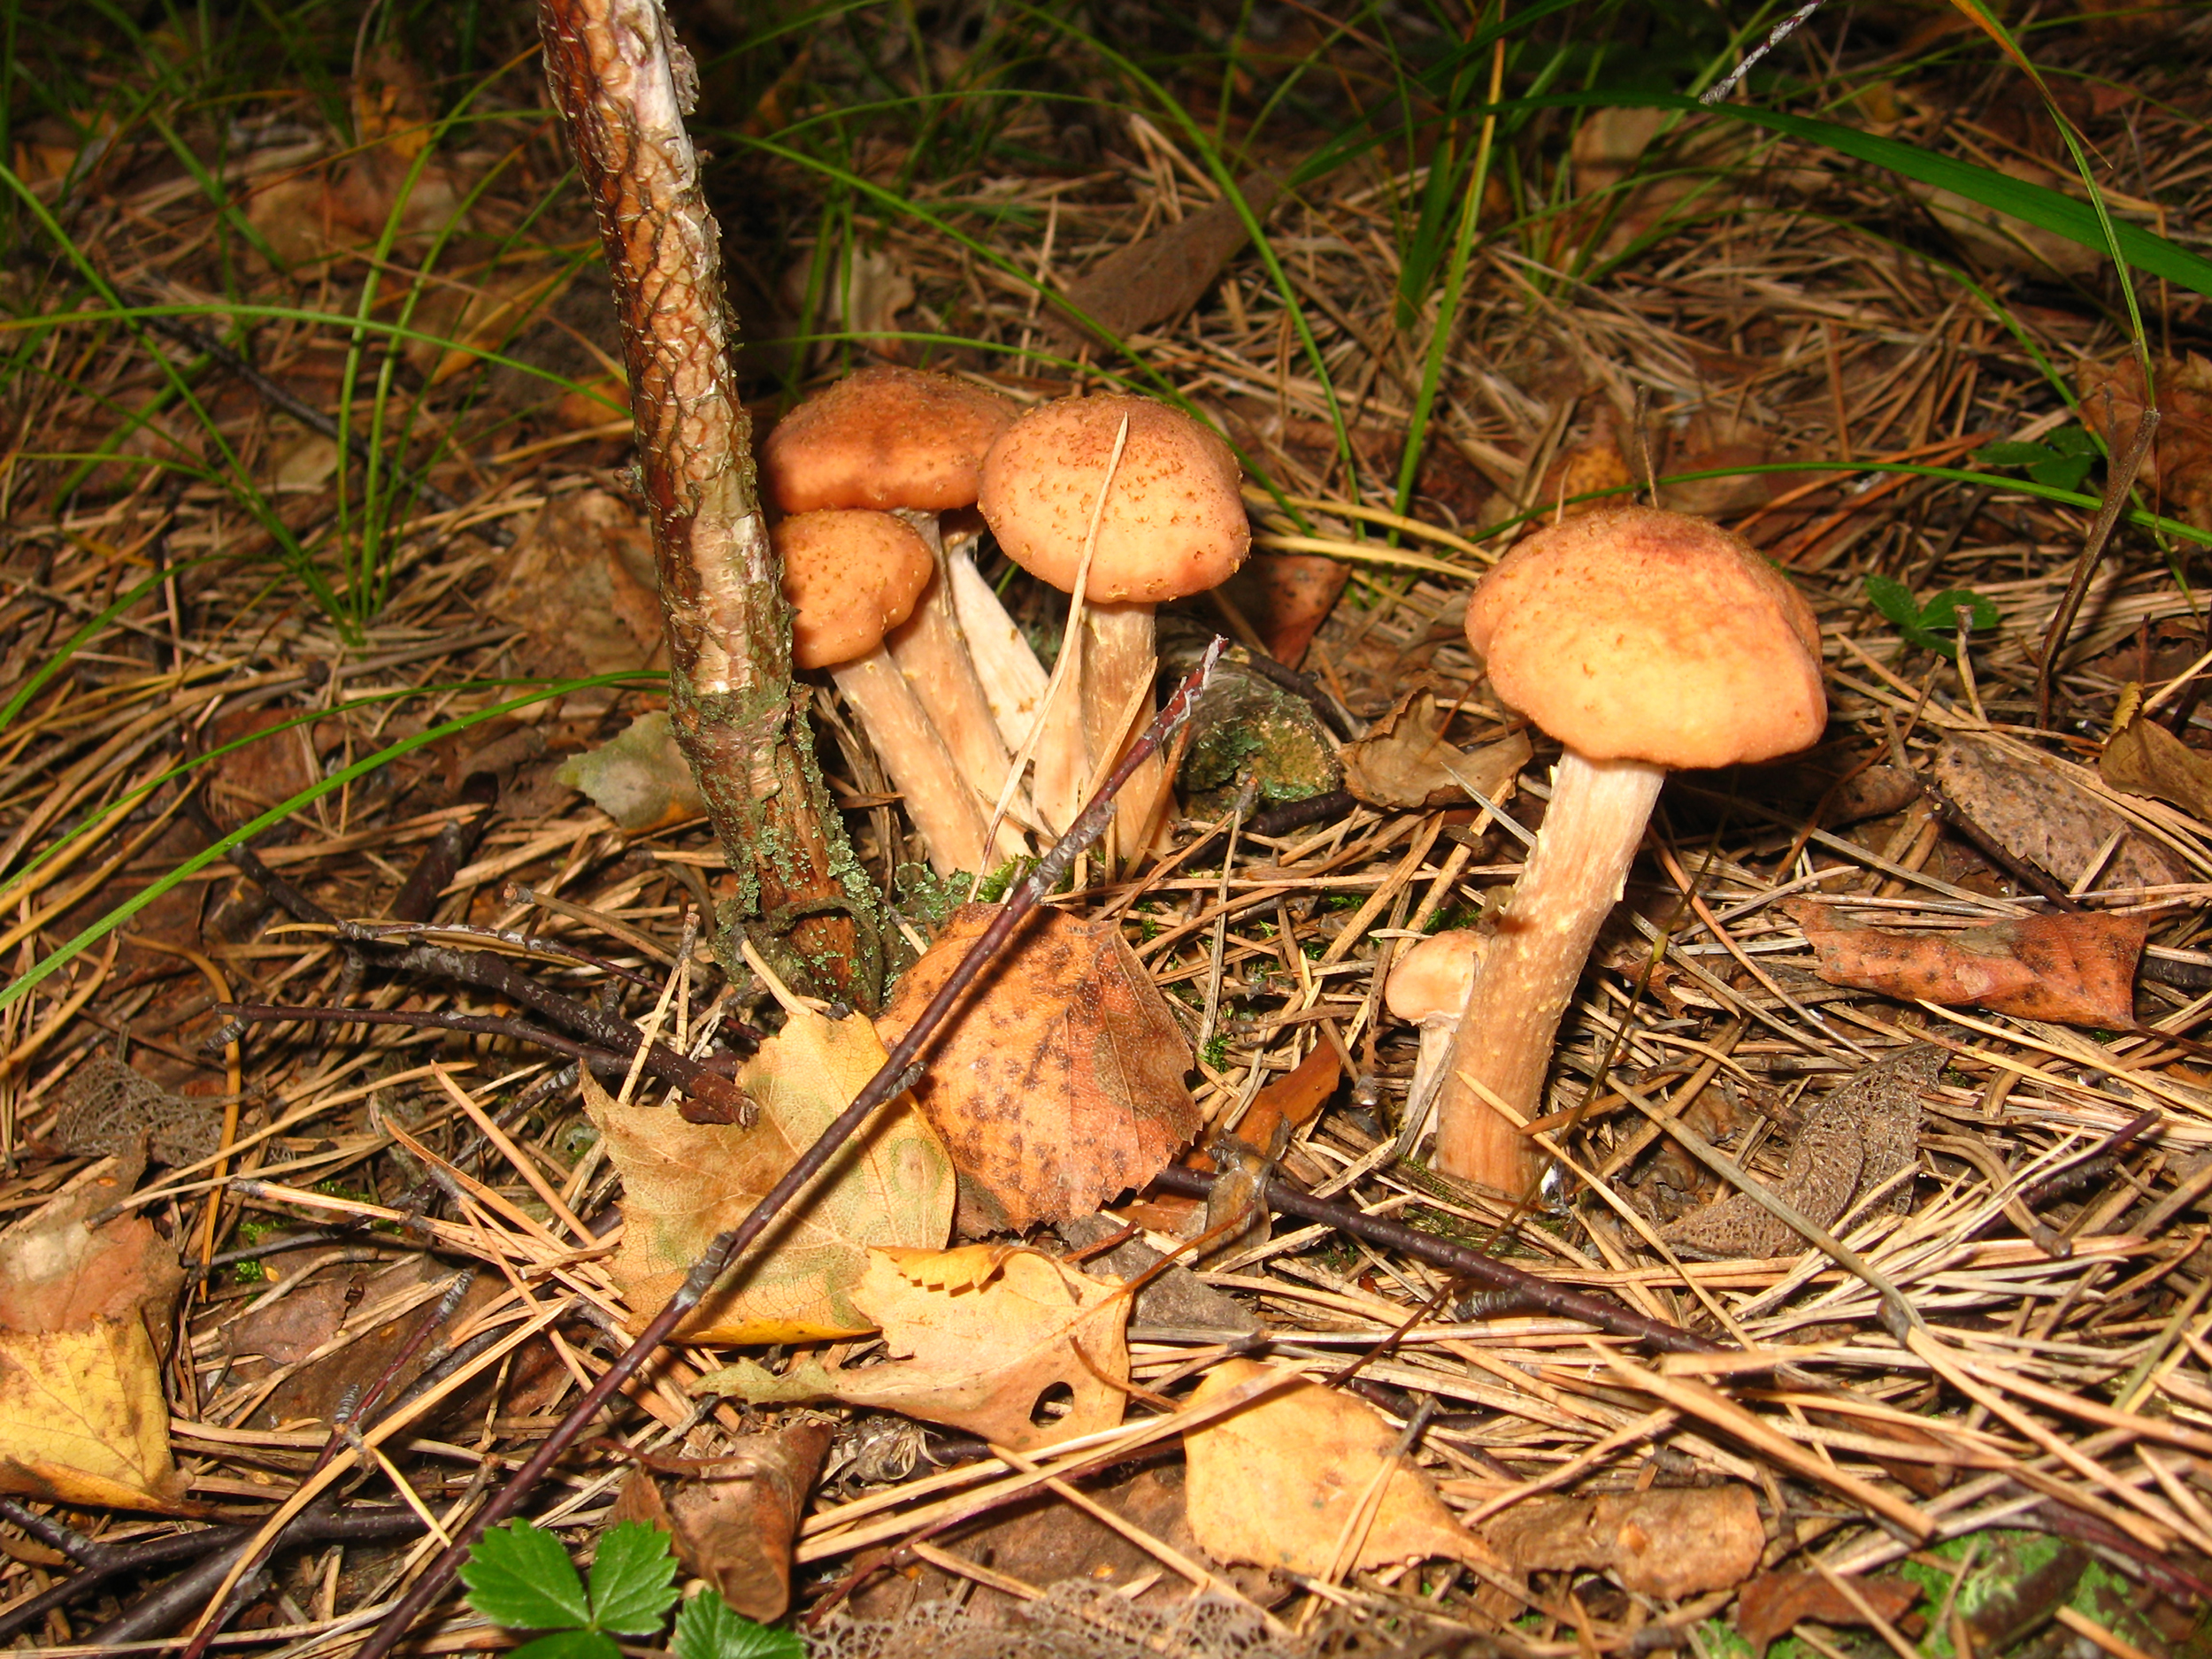 Wild mushroom foraging